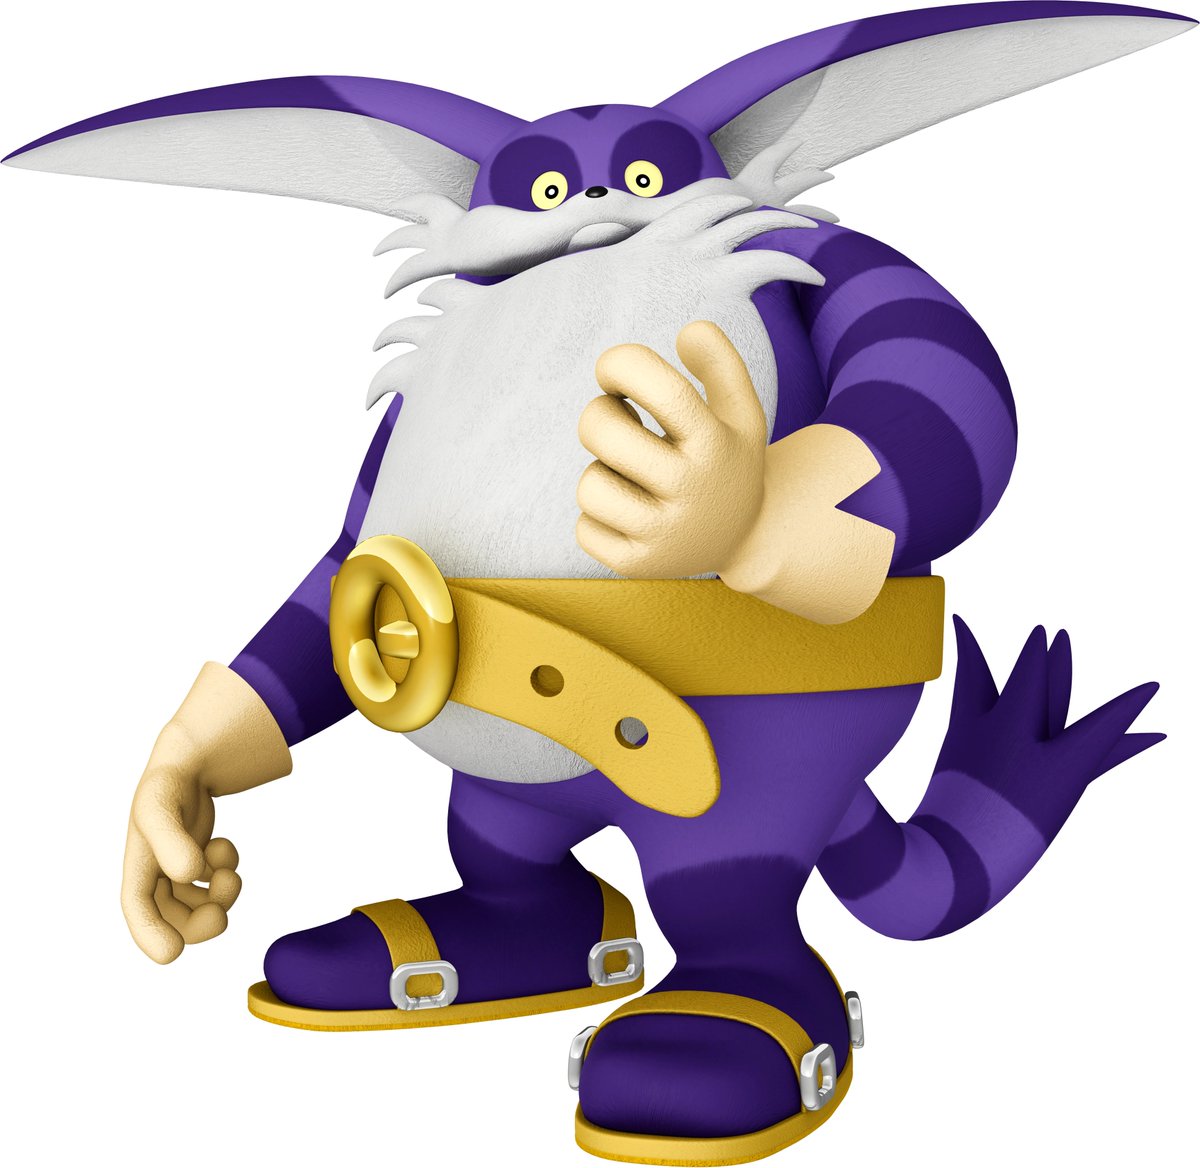 Do you like big?  #sonicprime #SonicFrontiers  #SonicSpeedSimulator  #SonicTheHedgehog  #bigthecat #amyrose